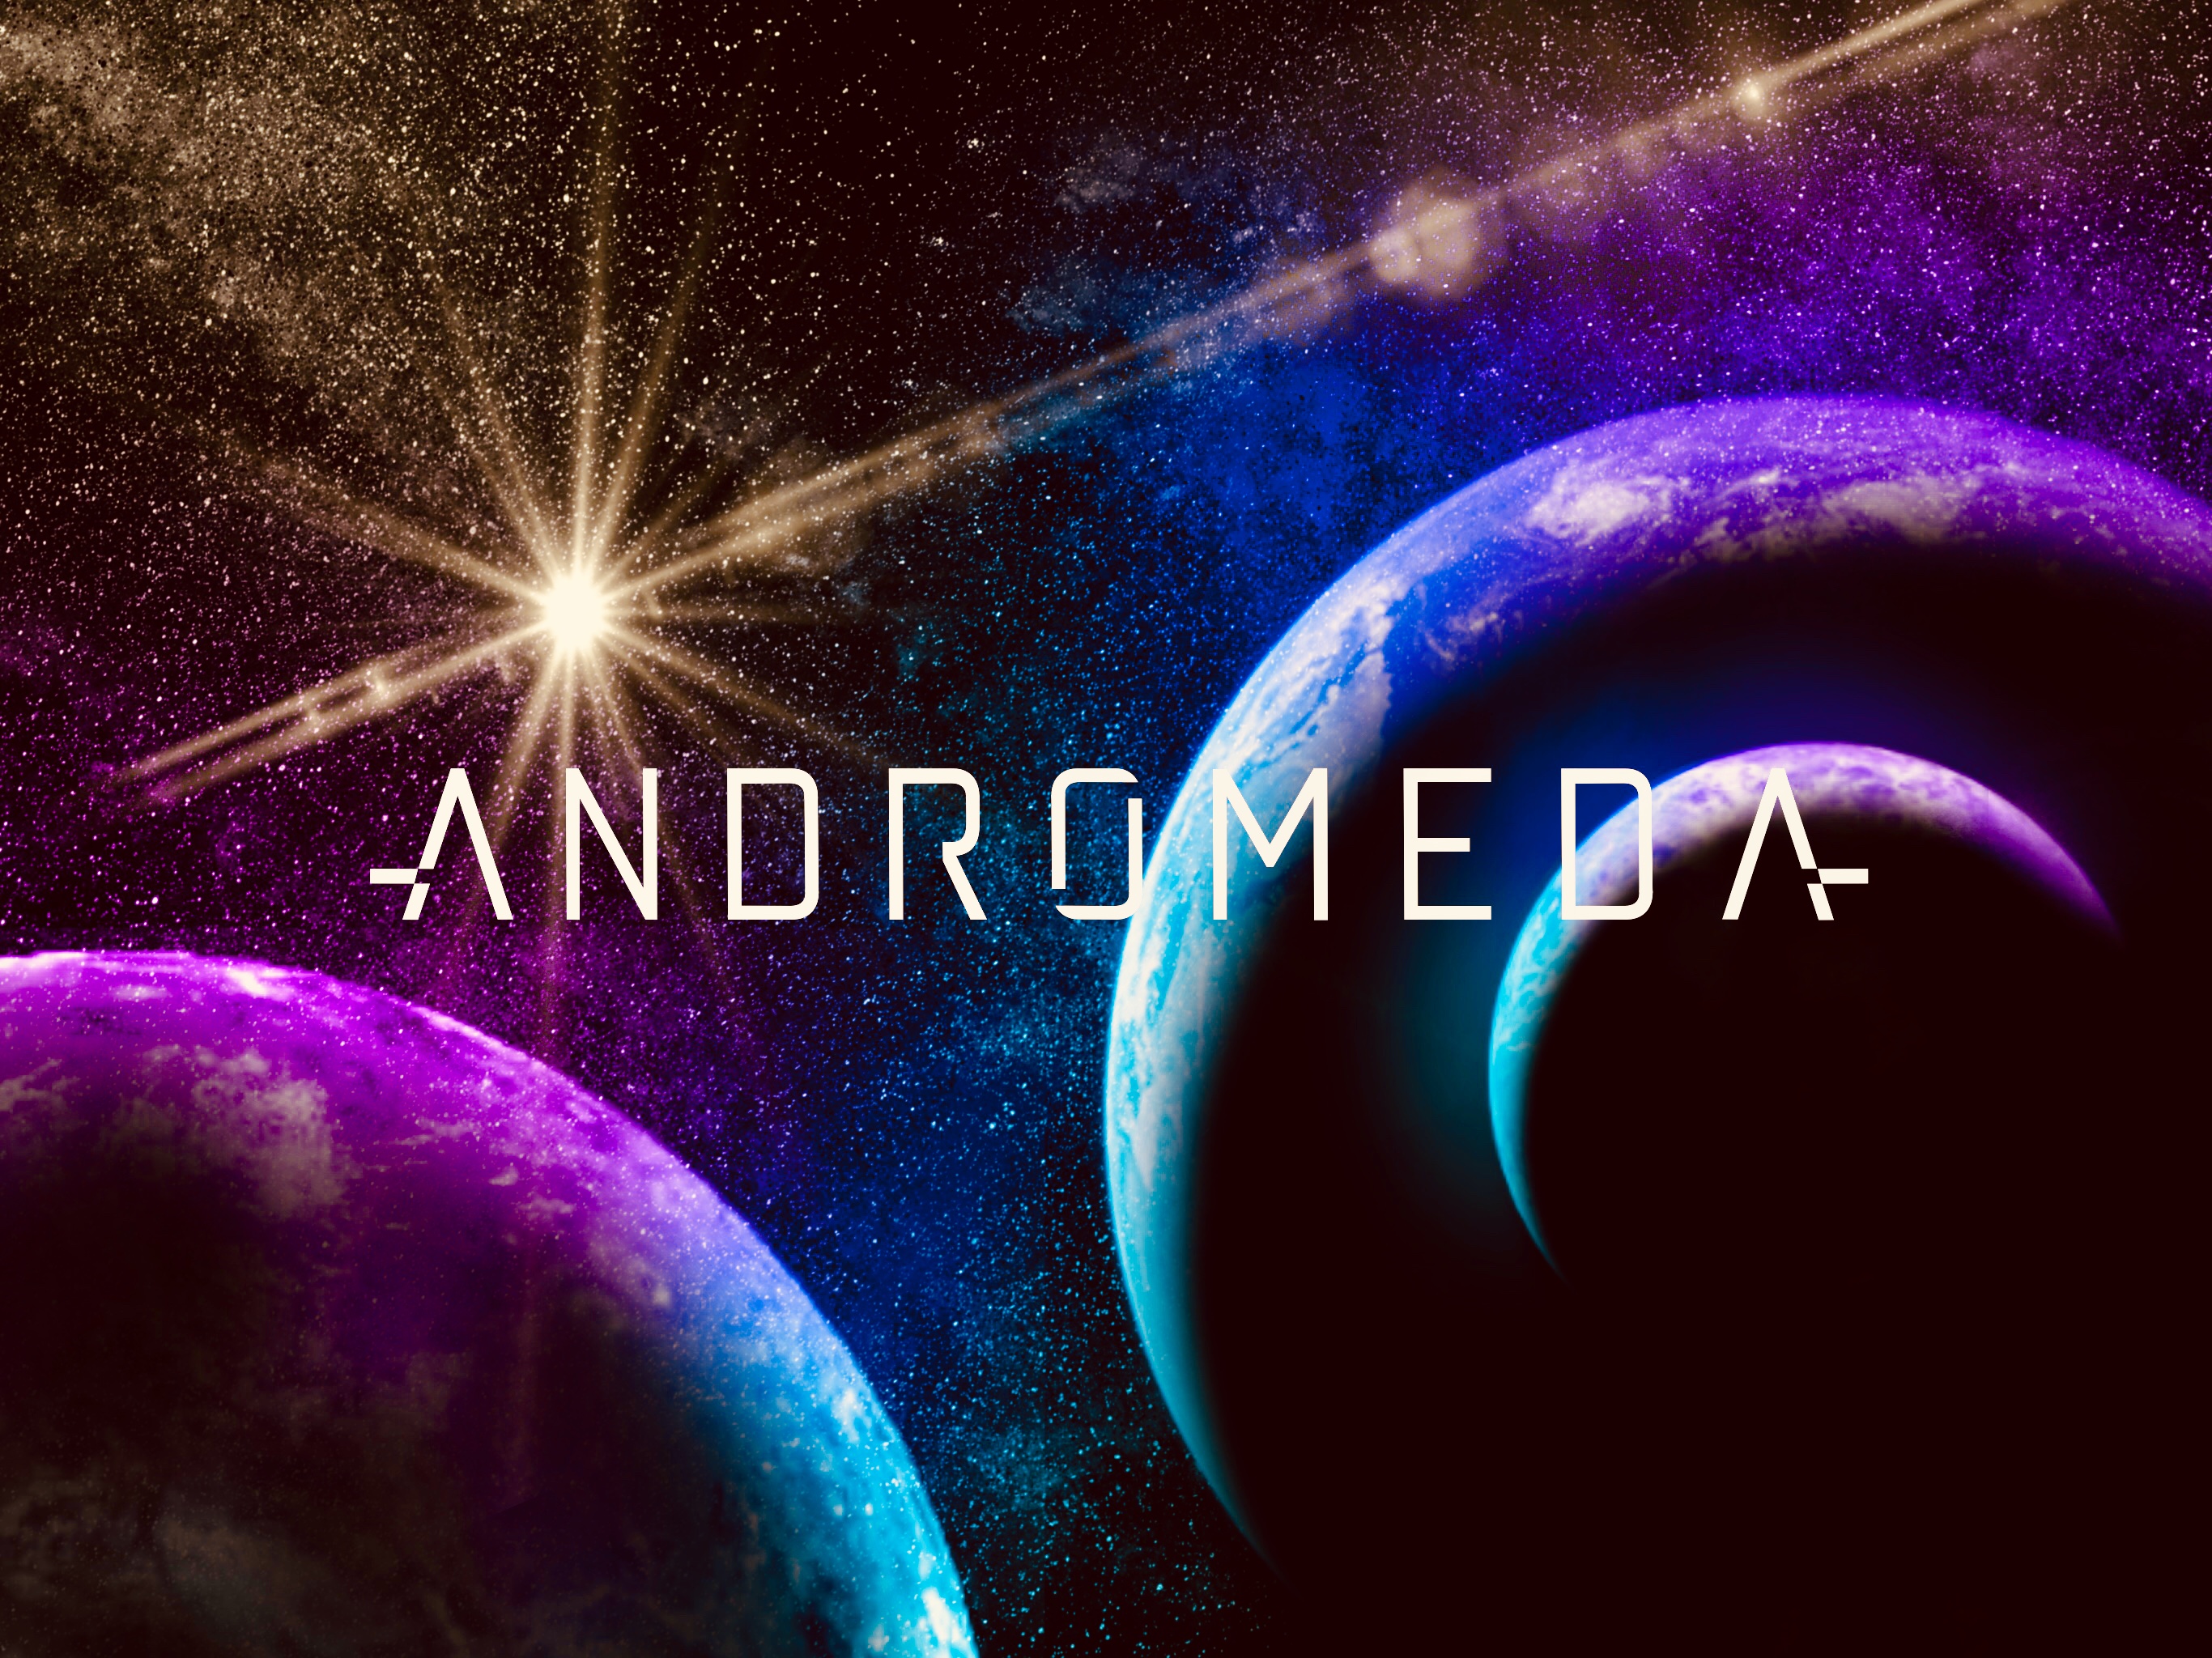 How to port forward Mass Effect: Andromeda - PureVPN Blog